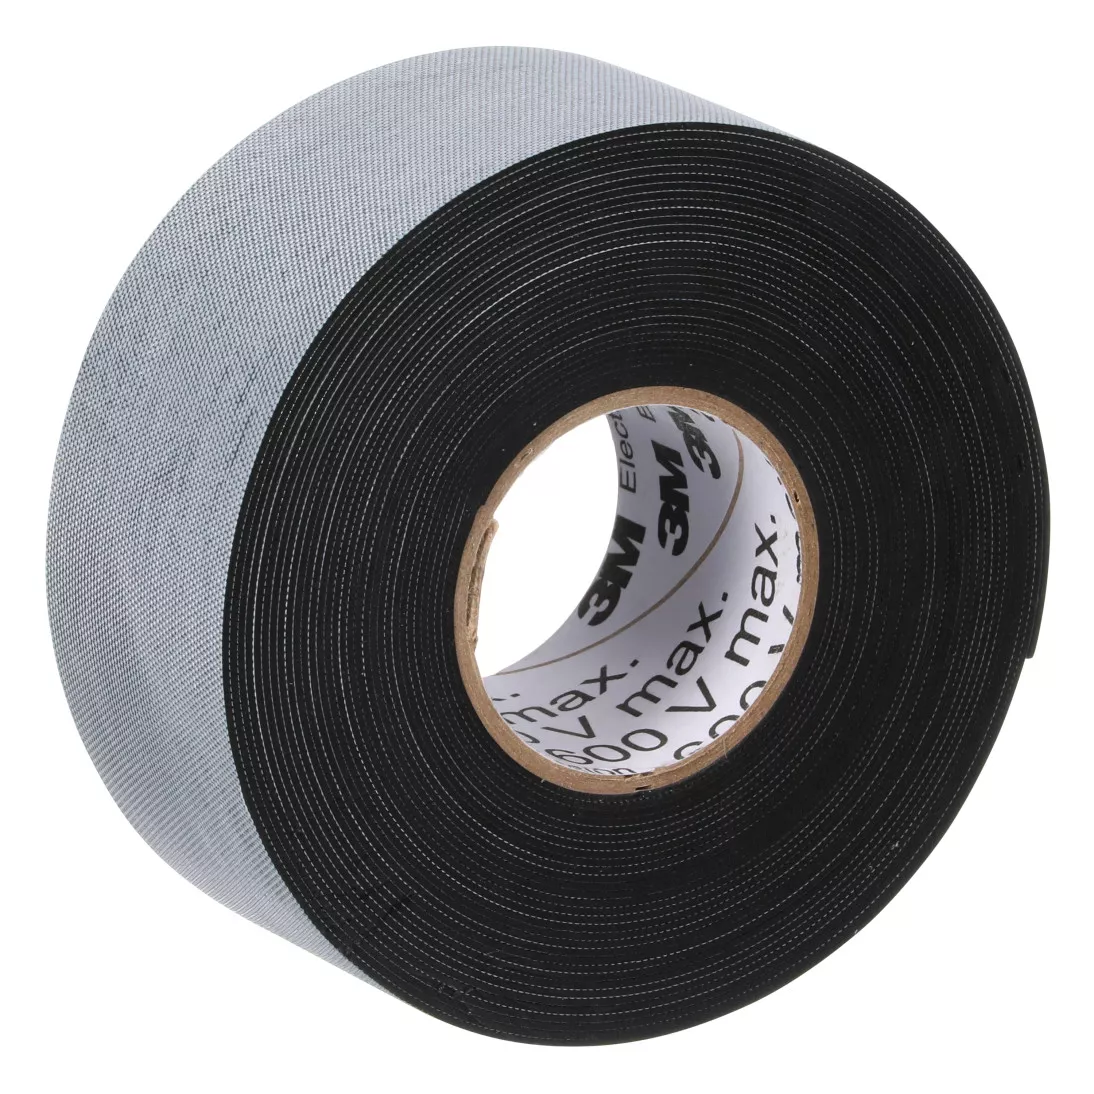 3M™ Temflex™ Rubber Splicing Tape 2155, 1-1/2 in x 22 ft, Black, 45
rolls/Case